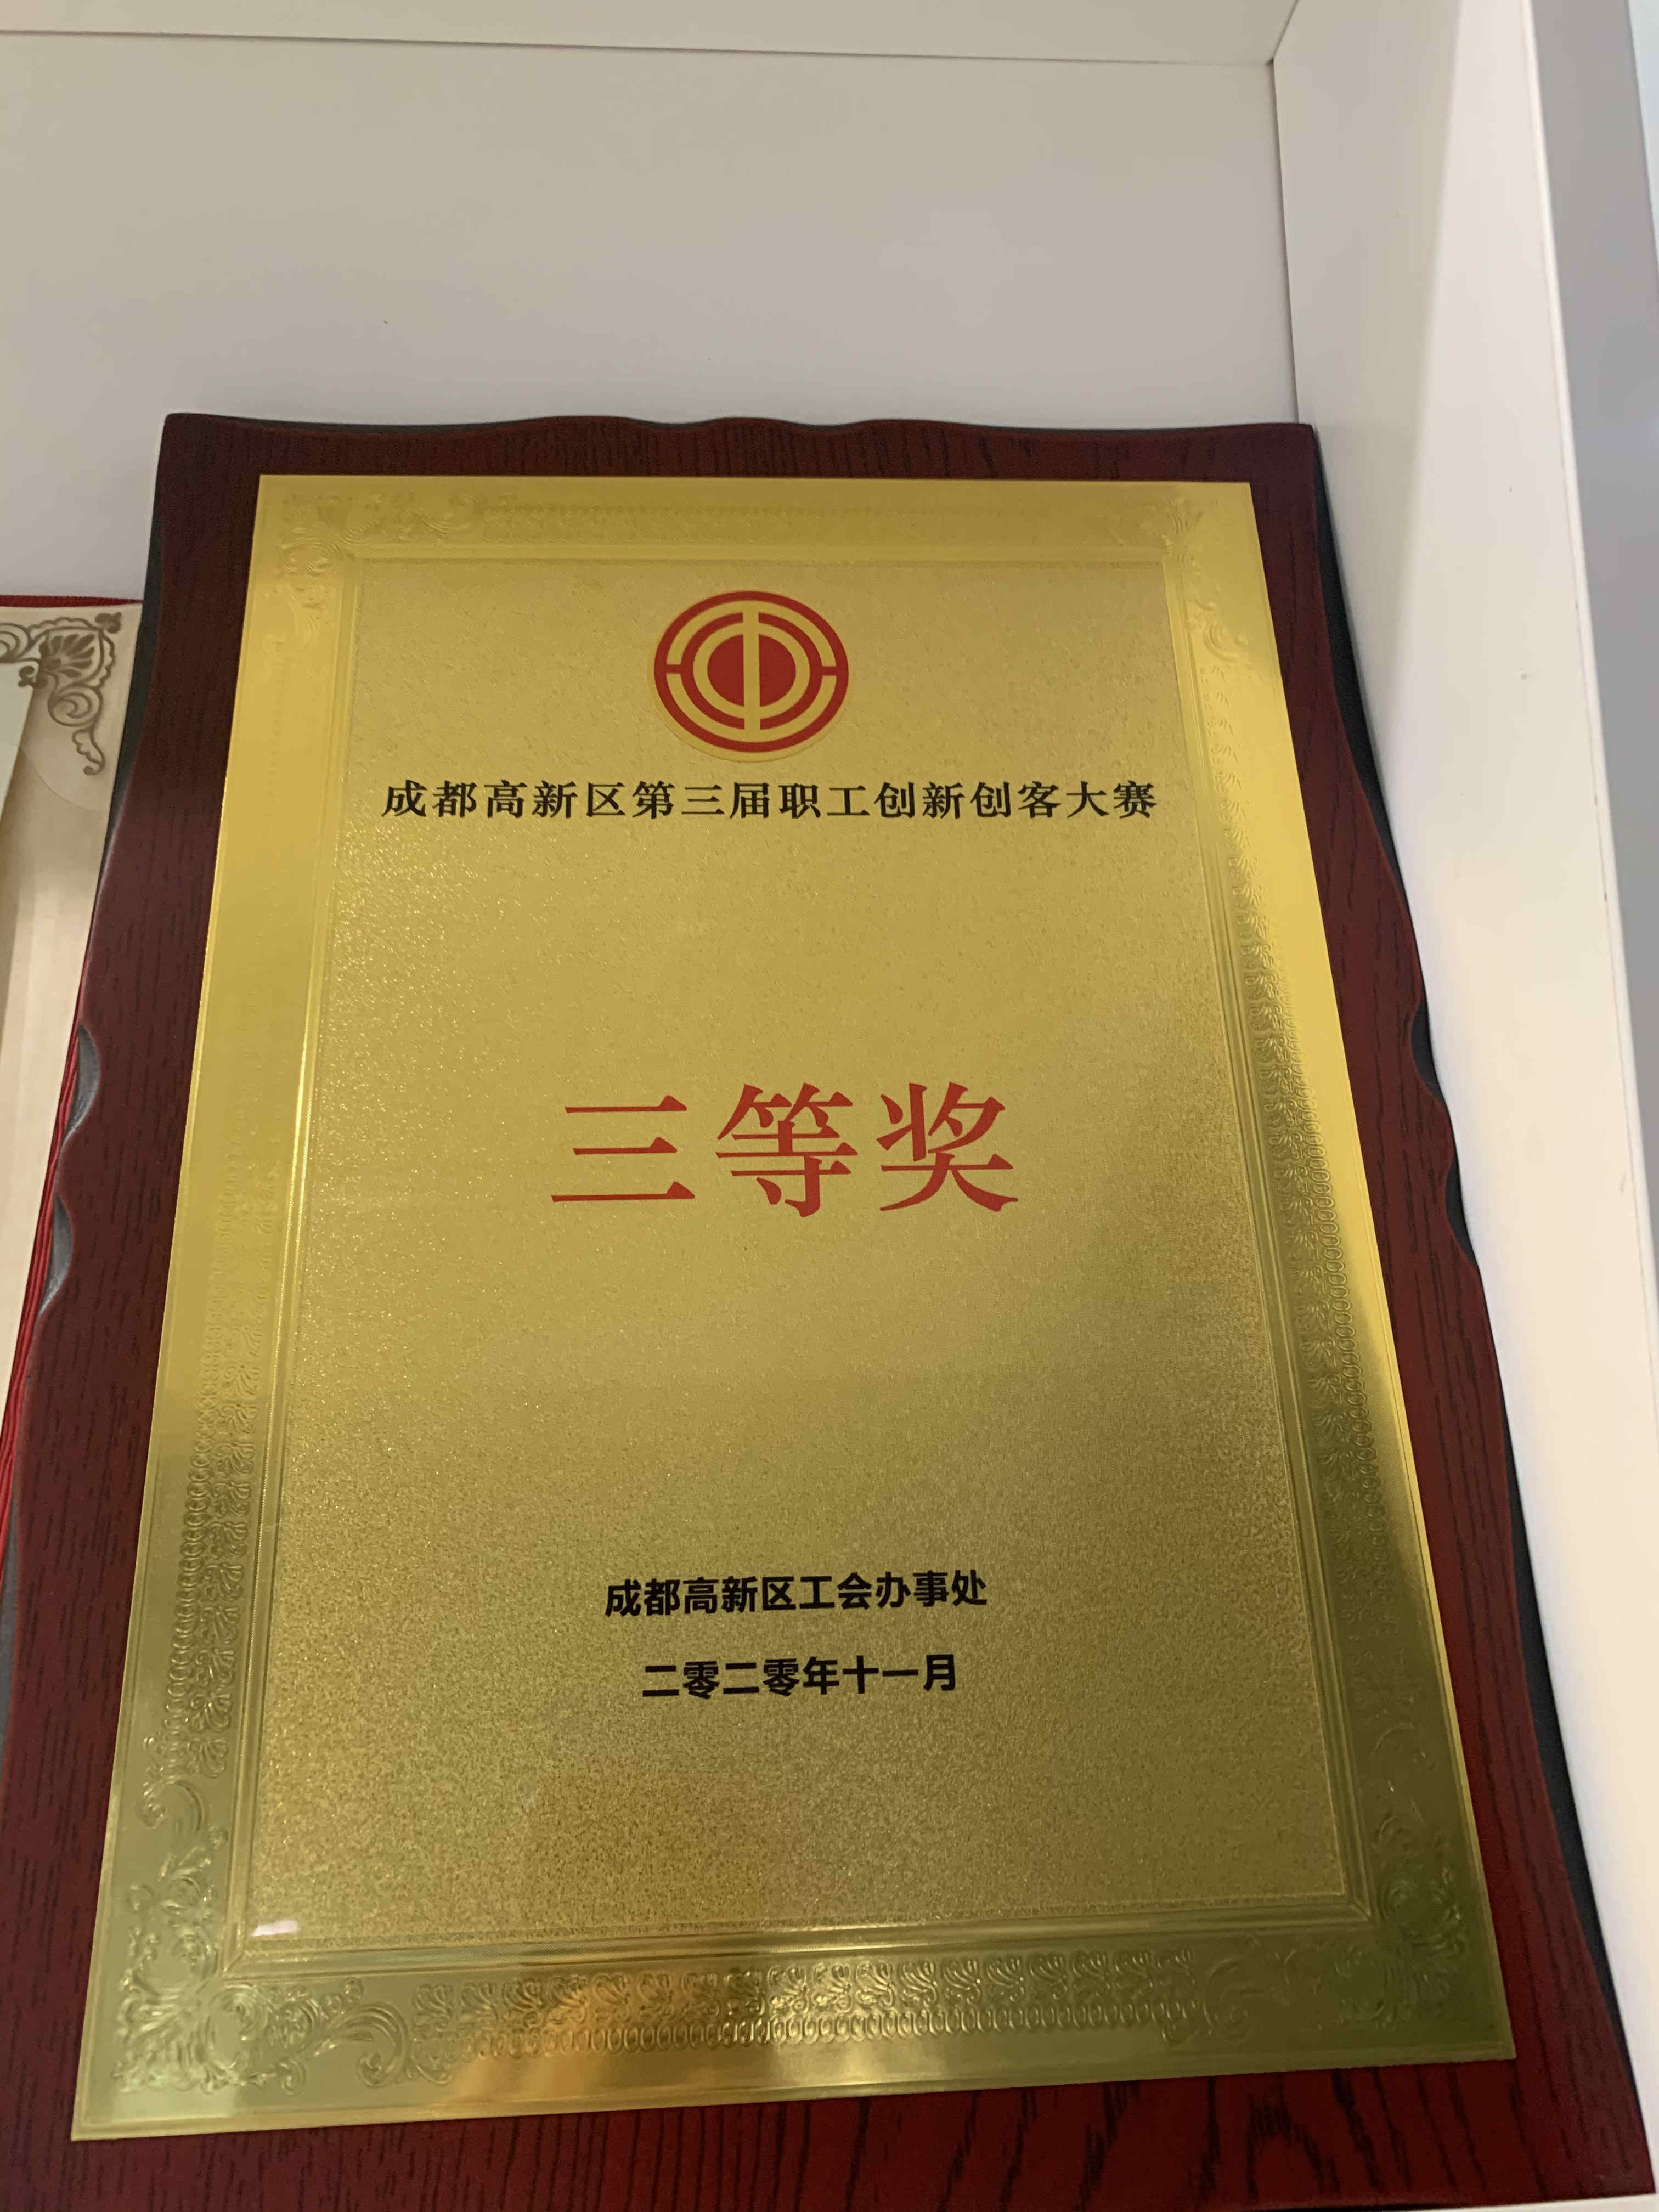 Китай Sichuan Xincheng Biological Co., Ltd. Сертификаты